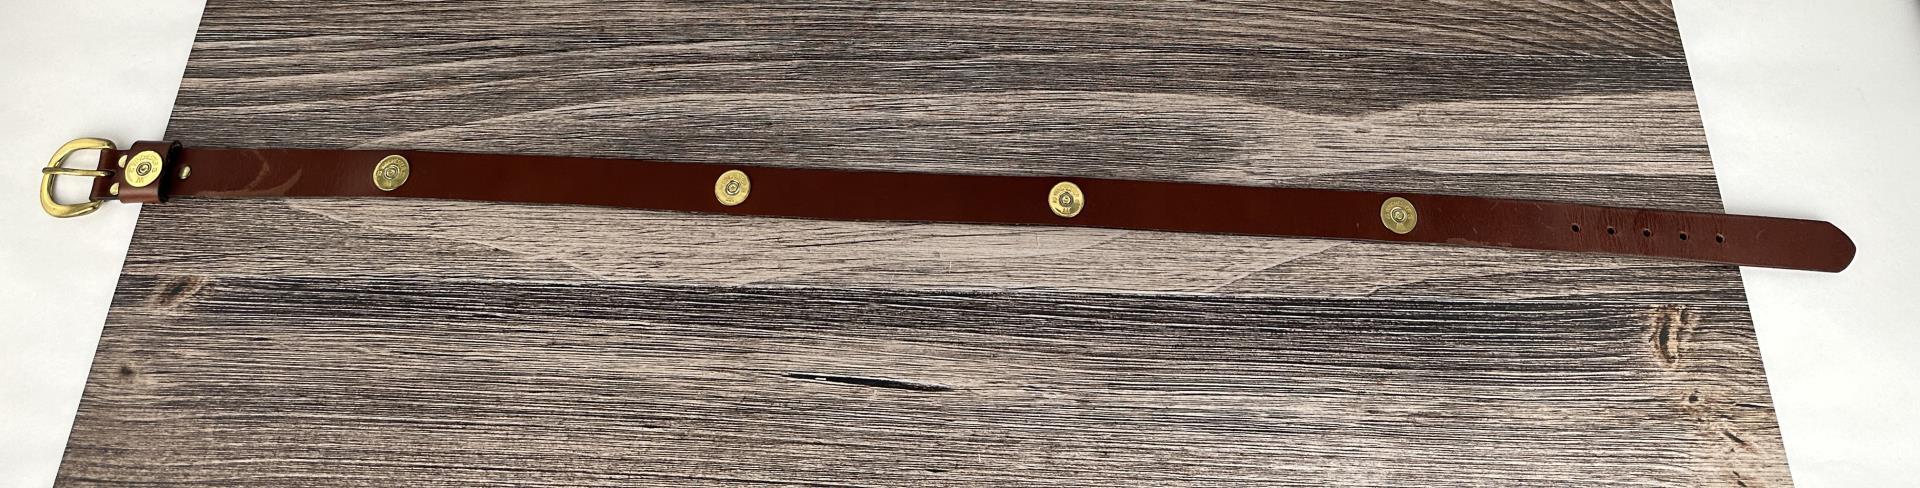 Royden Leather Belt Made in Pennsylvania